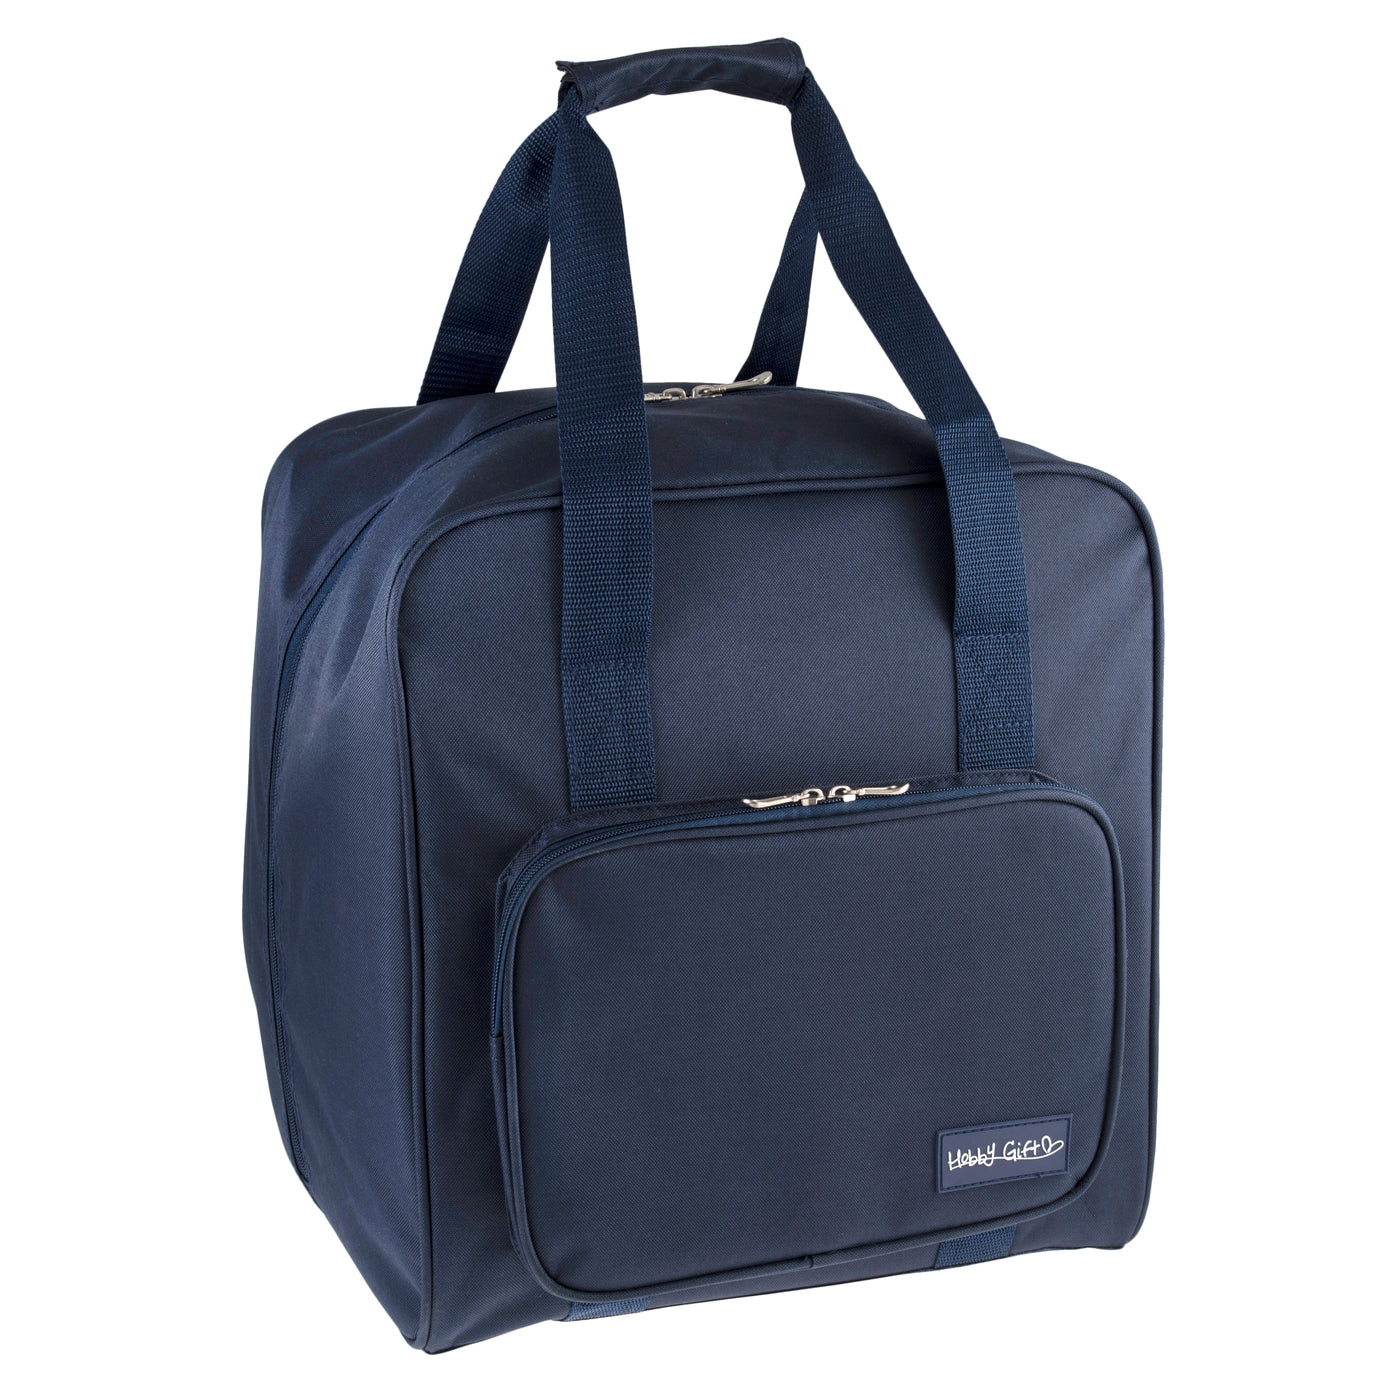 Overlocker bag Navy blue Sewing Machine Bag. 39 x 32 x 36cm